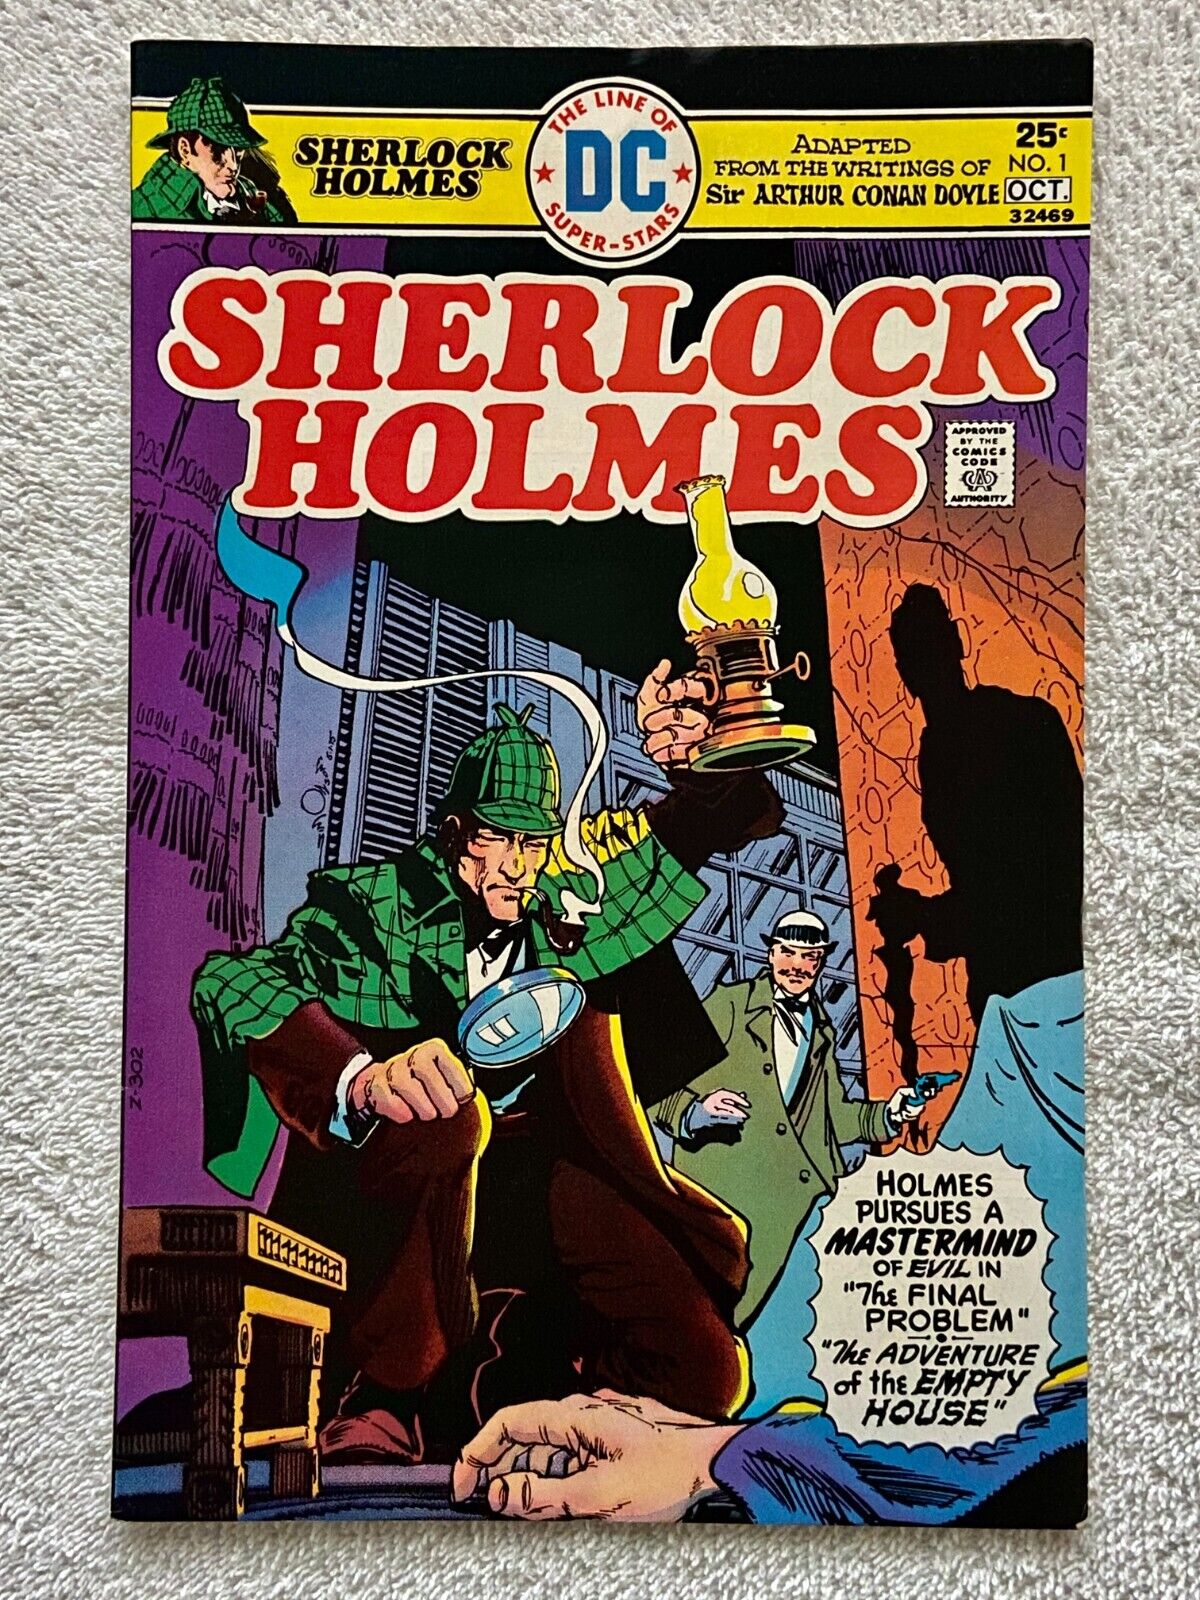 Sherlock Holmes #1, October 1975 DC Comics